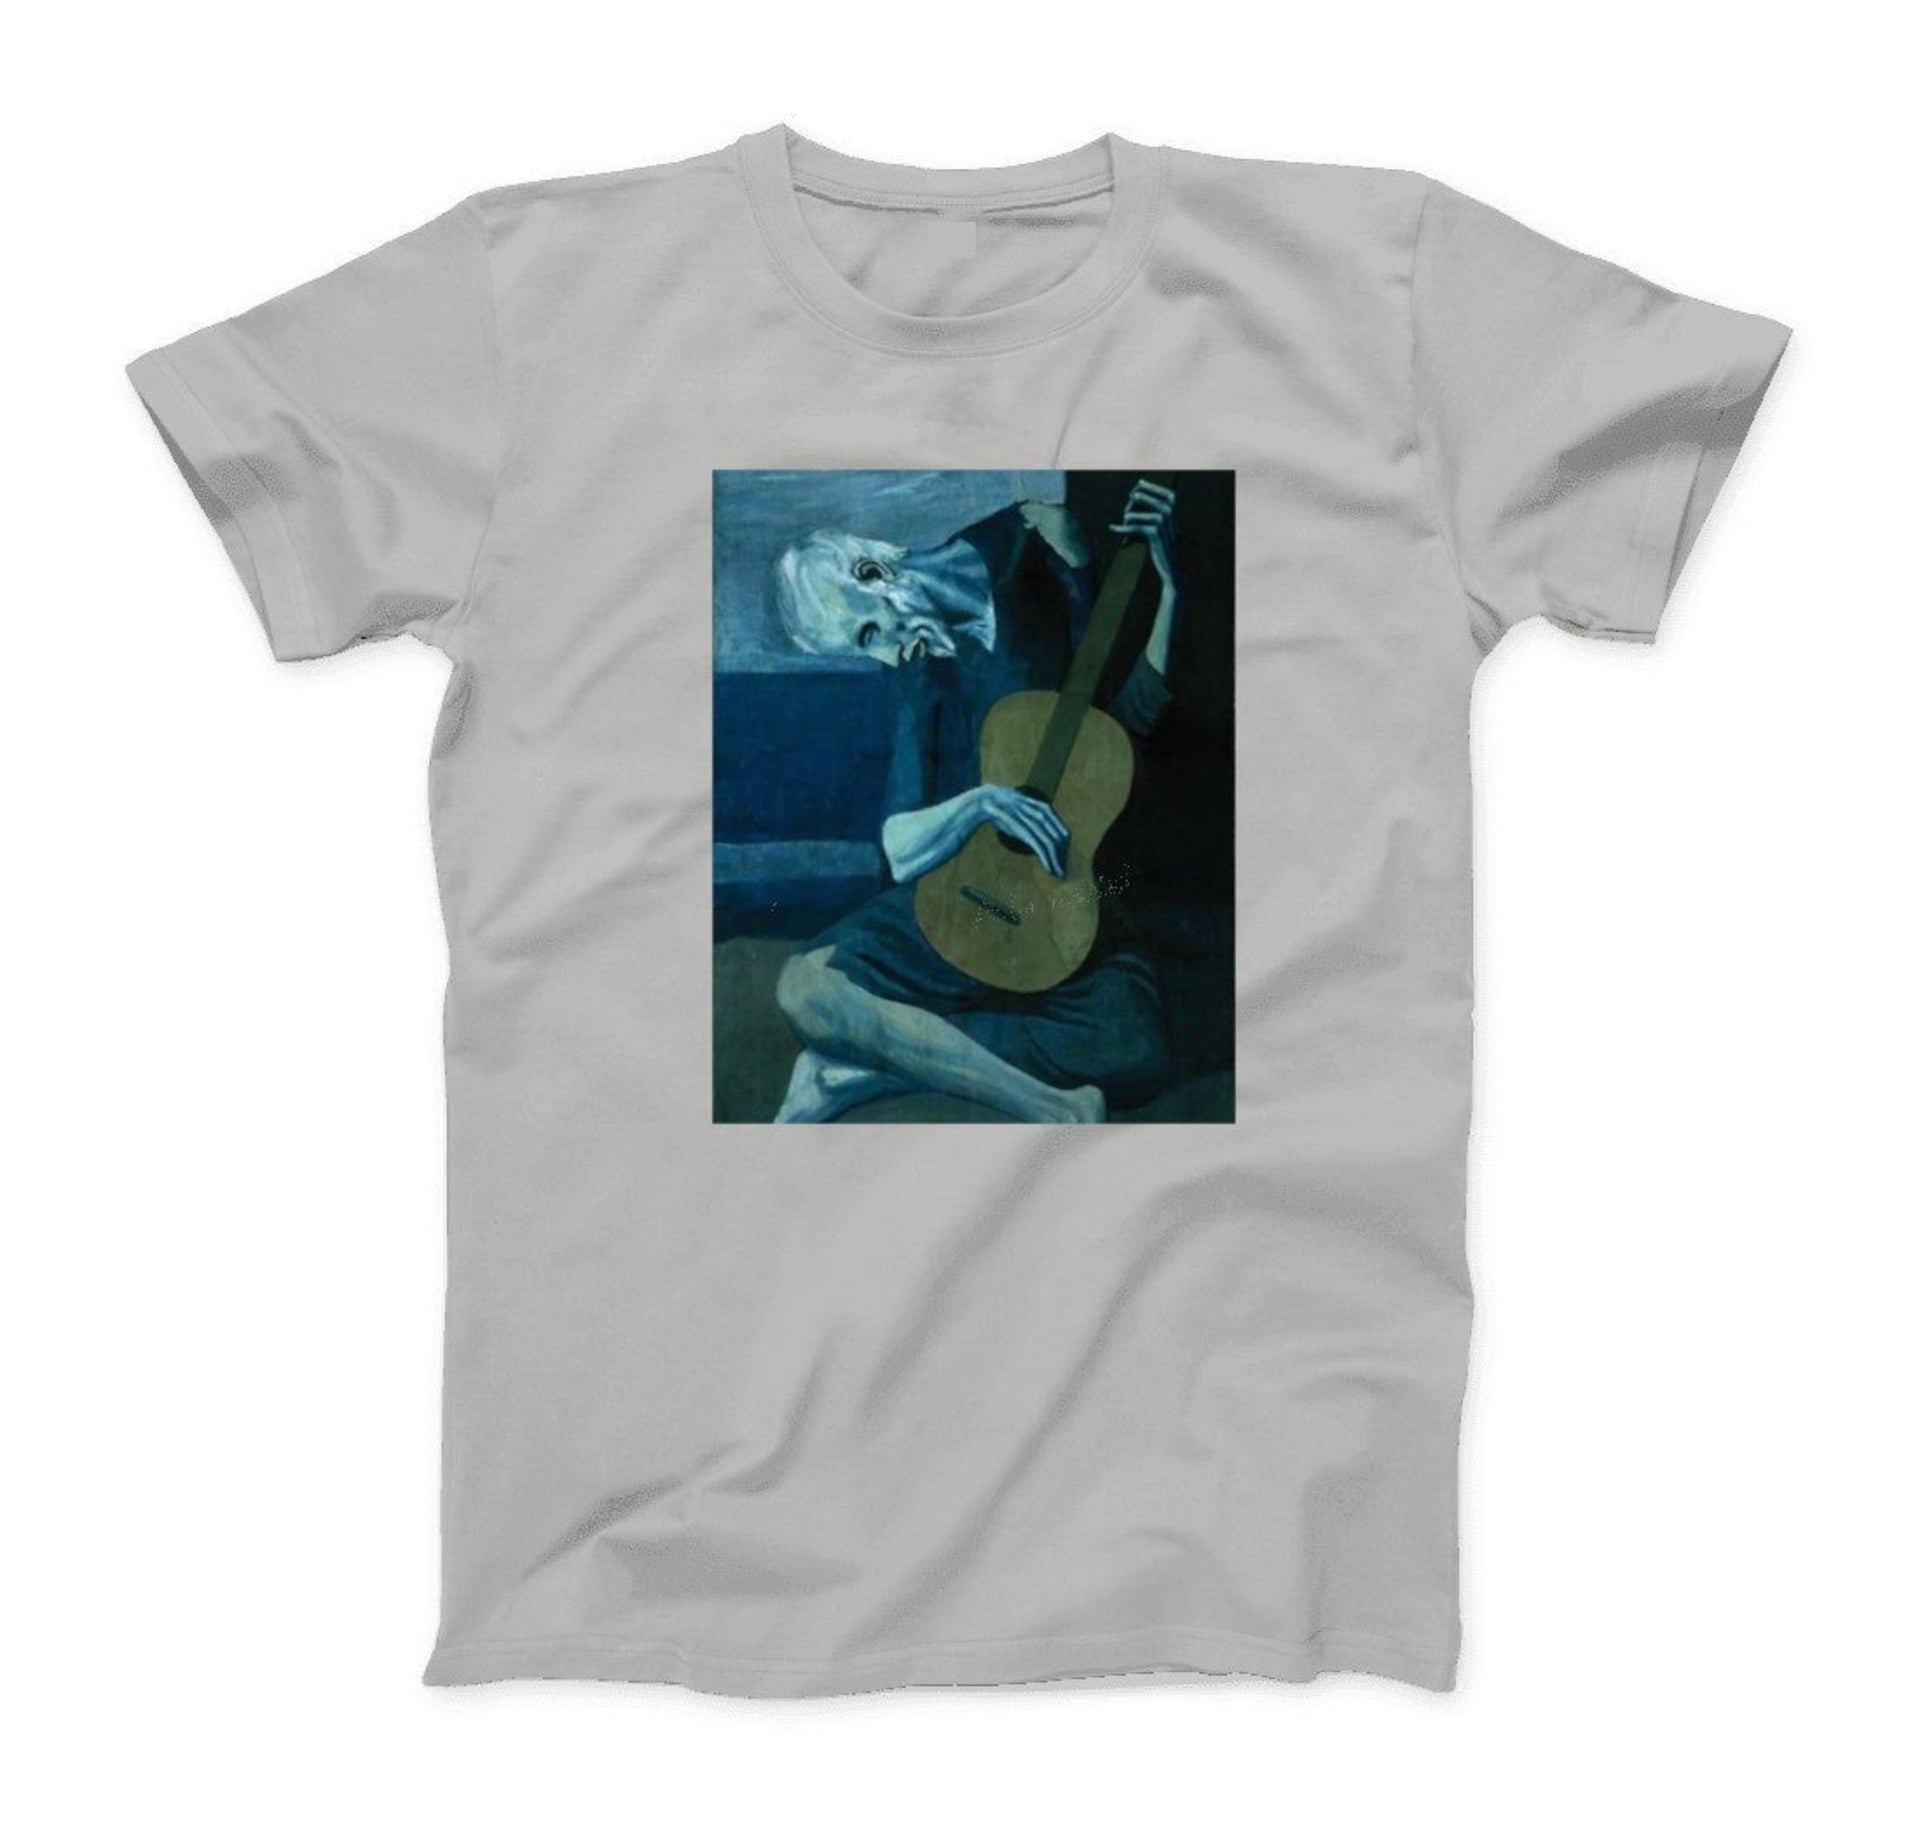 Pablo Picasso The Old Guitarist 1903 Artwork T-shirt - Clothing - Harvey Ltd